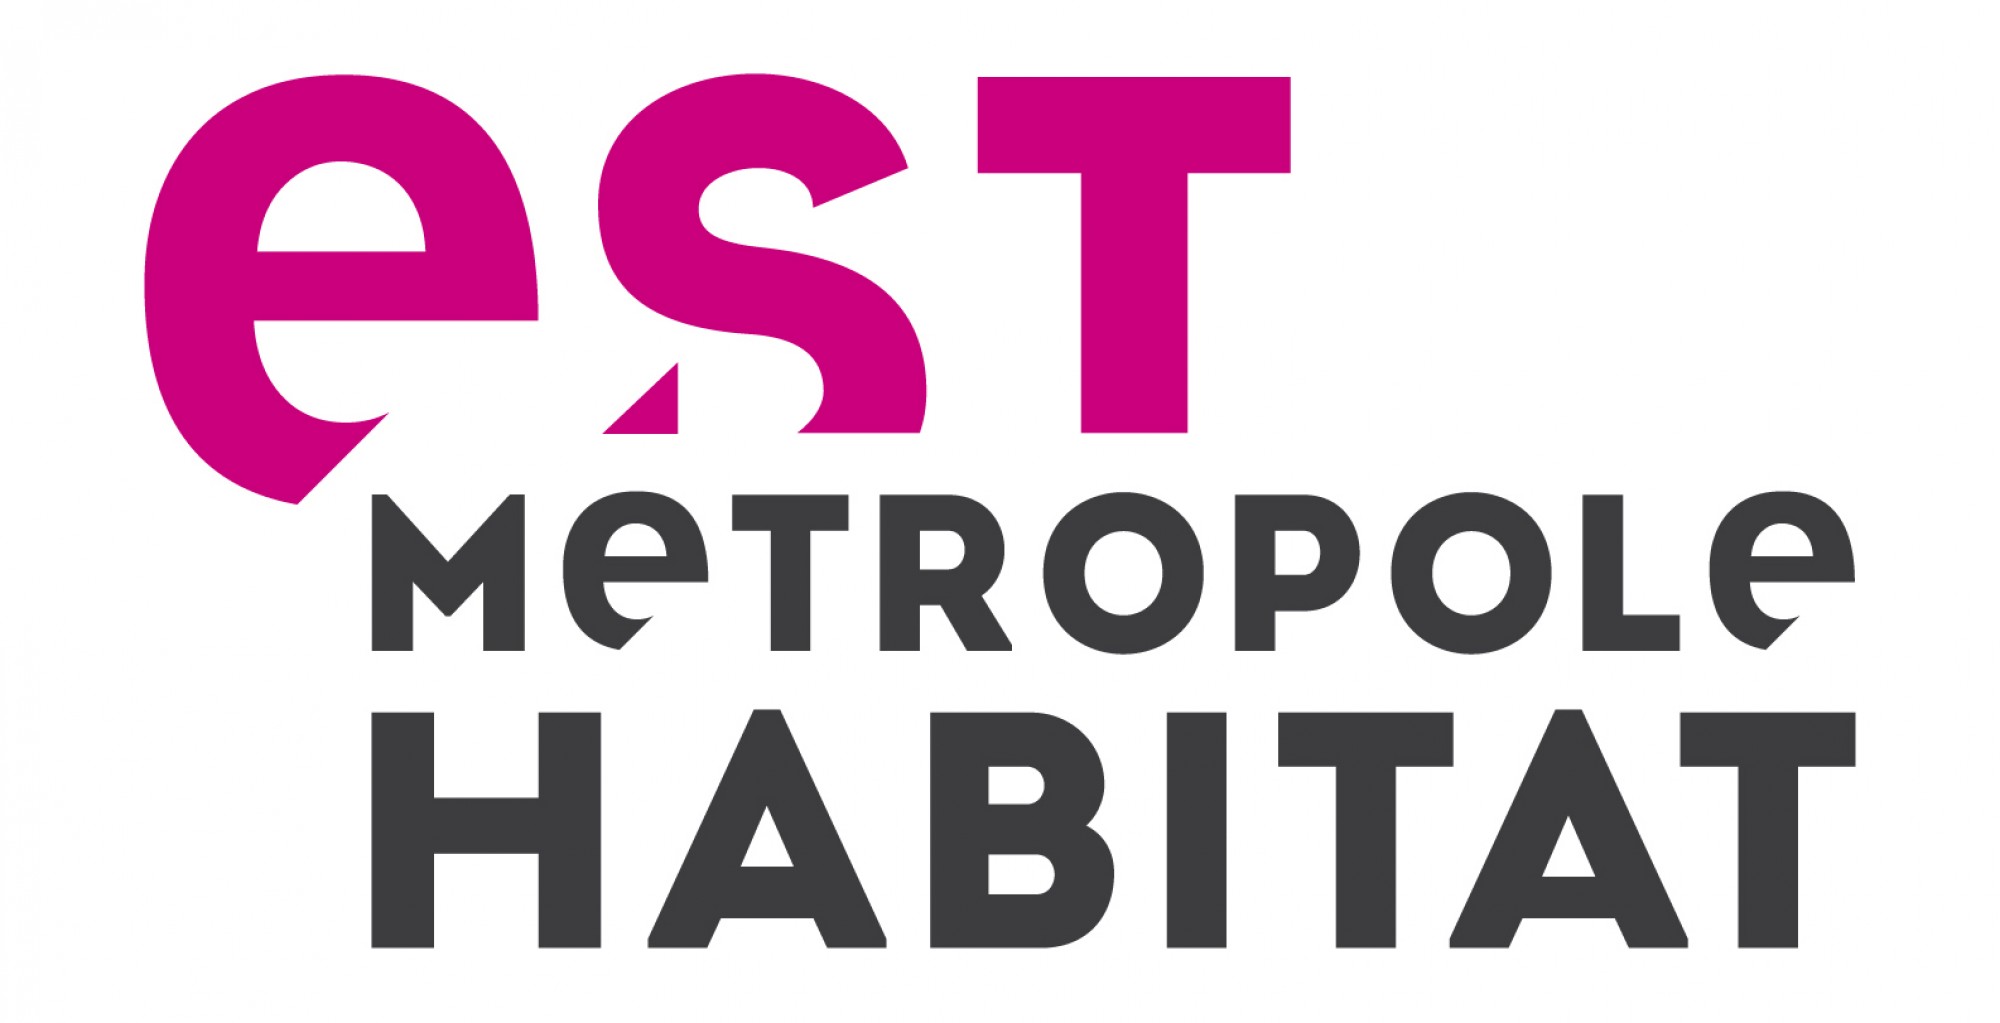 Est-mtropole-habitat-logo